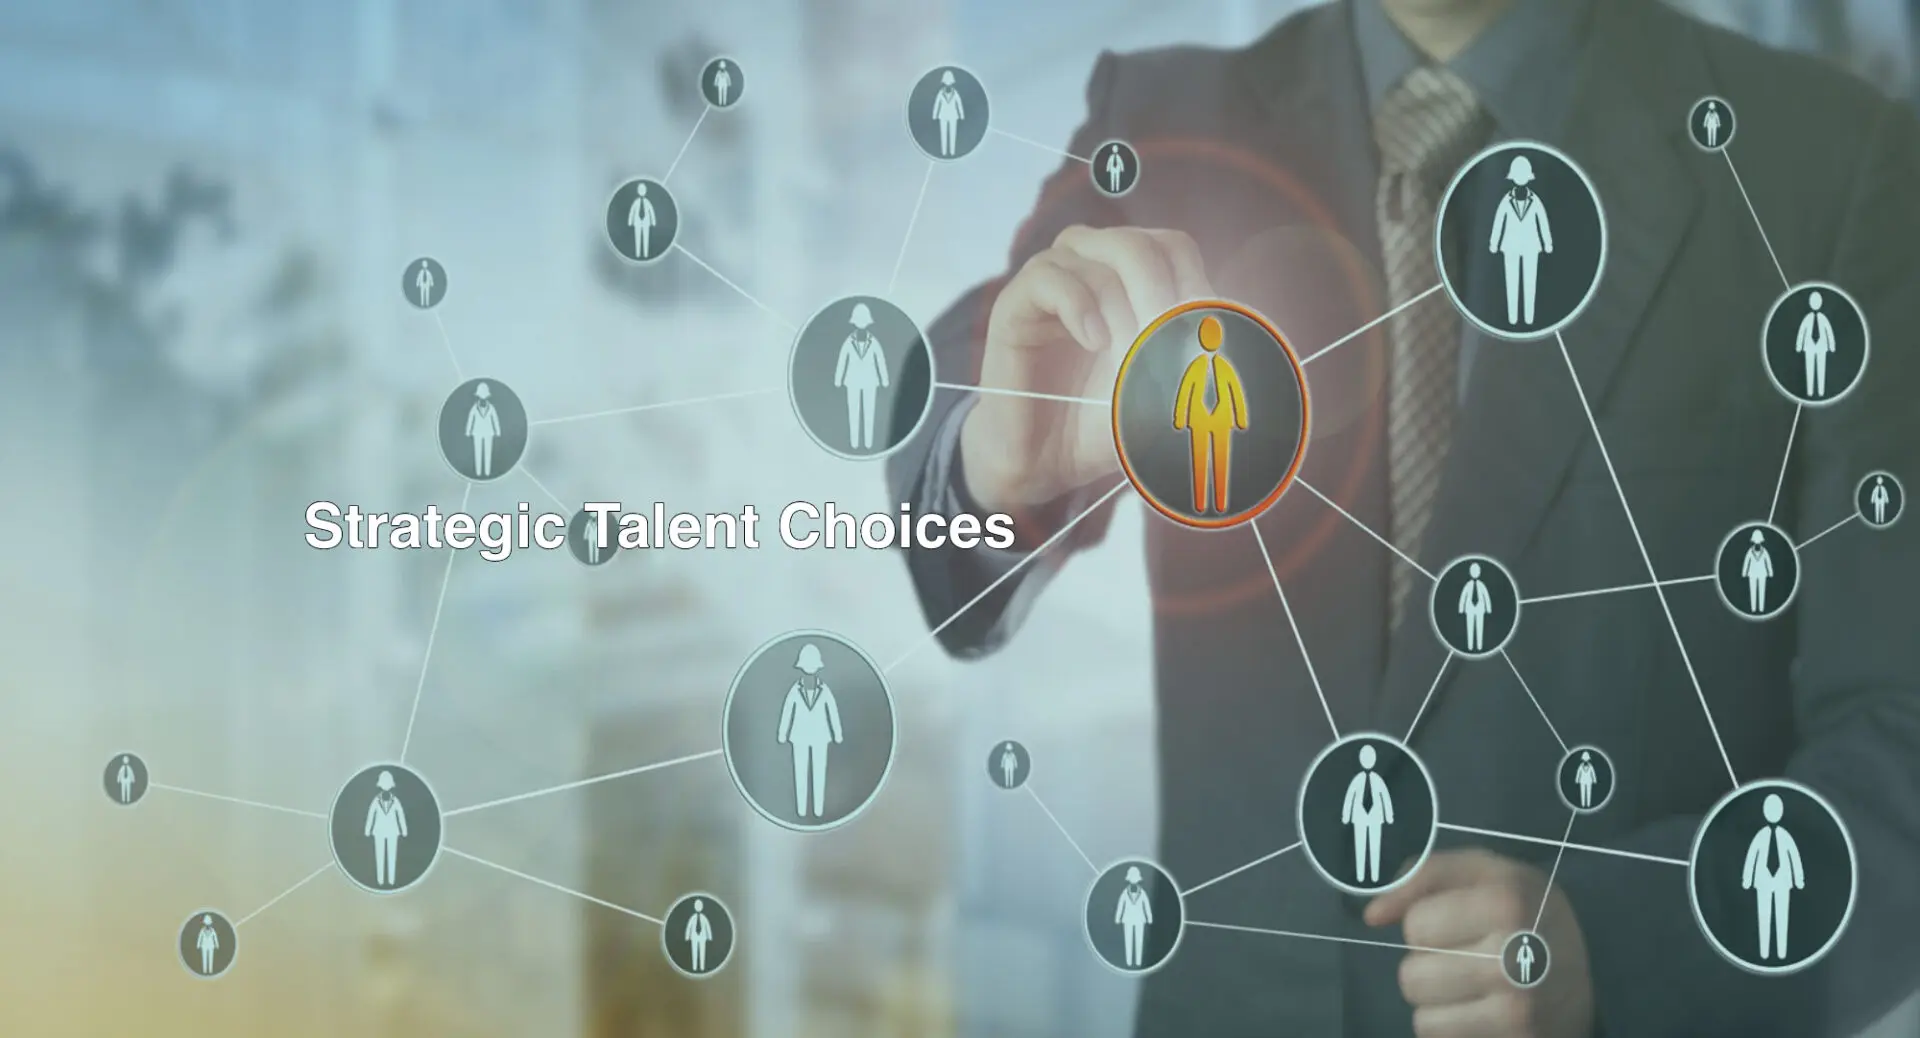 Strategic Talent Choices text on a digital illustration